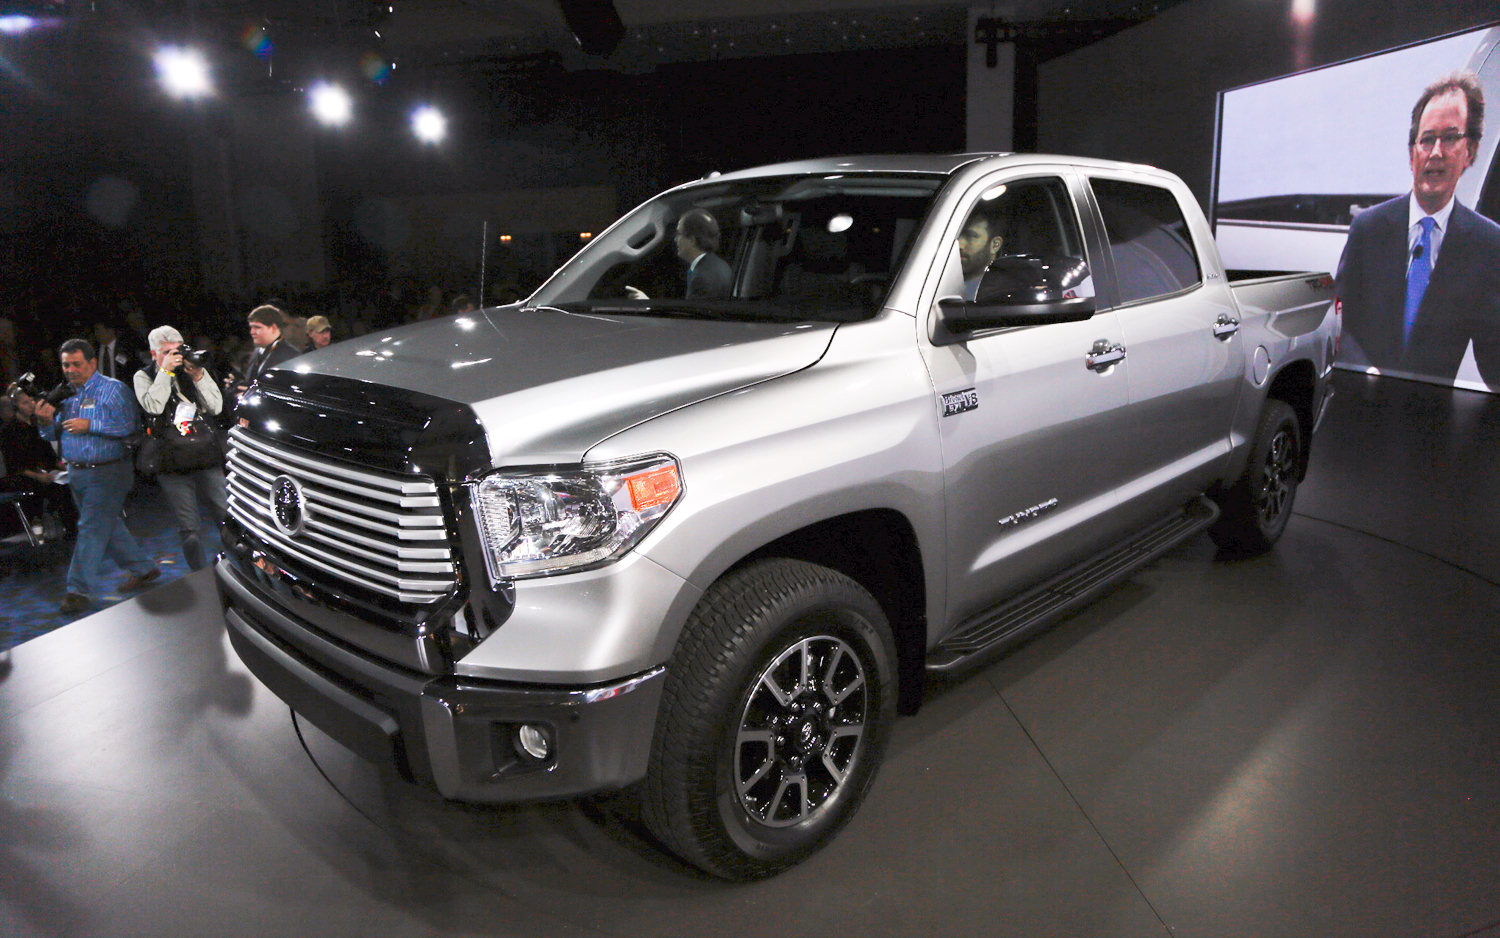 2014 Toyota Tundra | New cars reviews